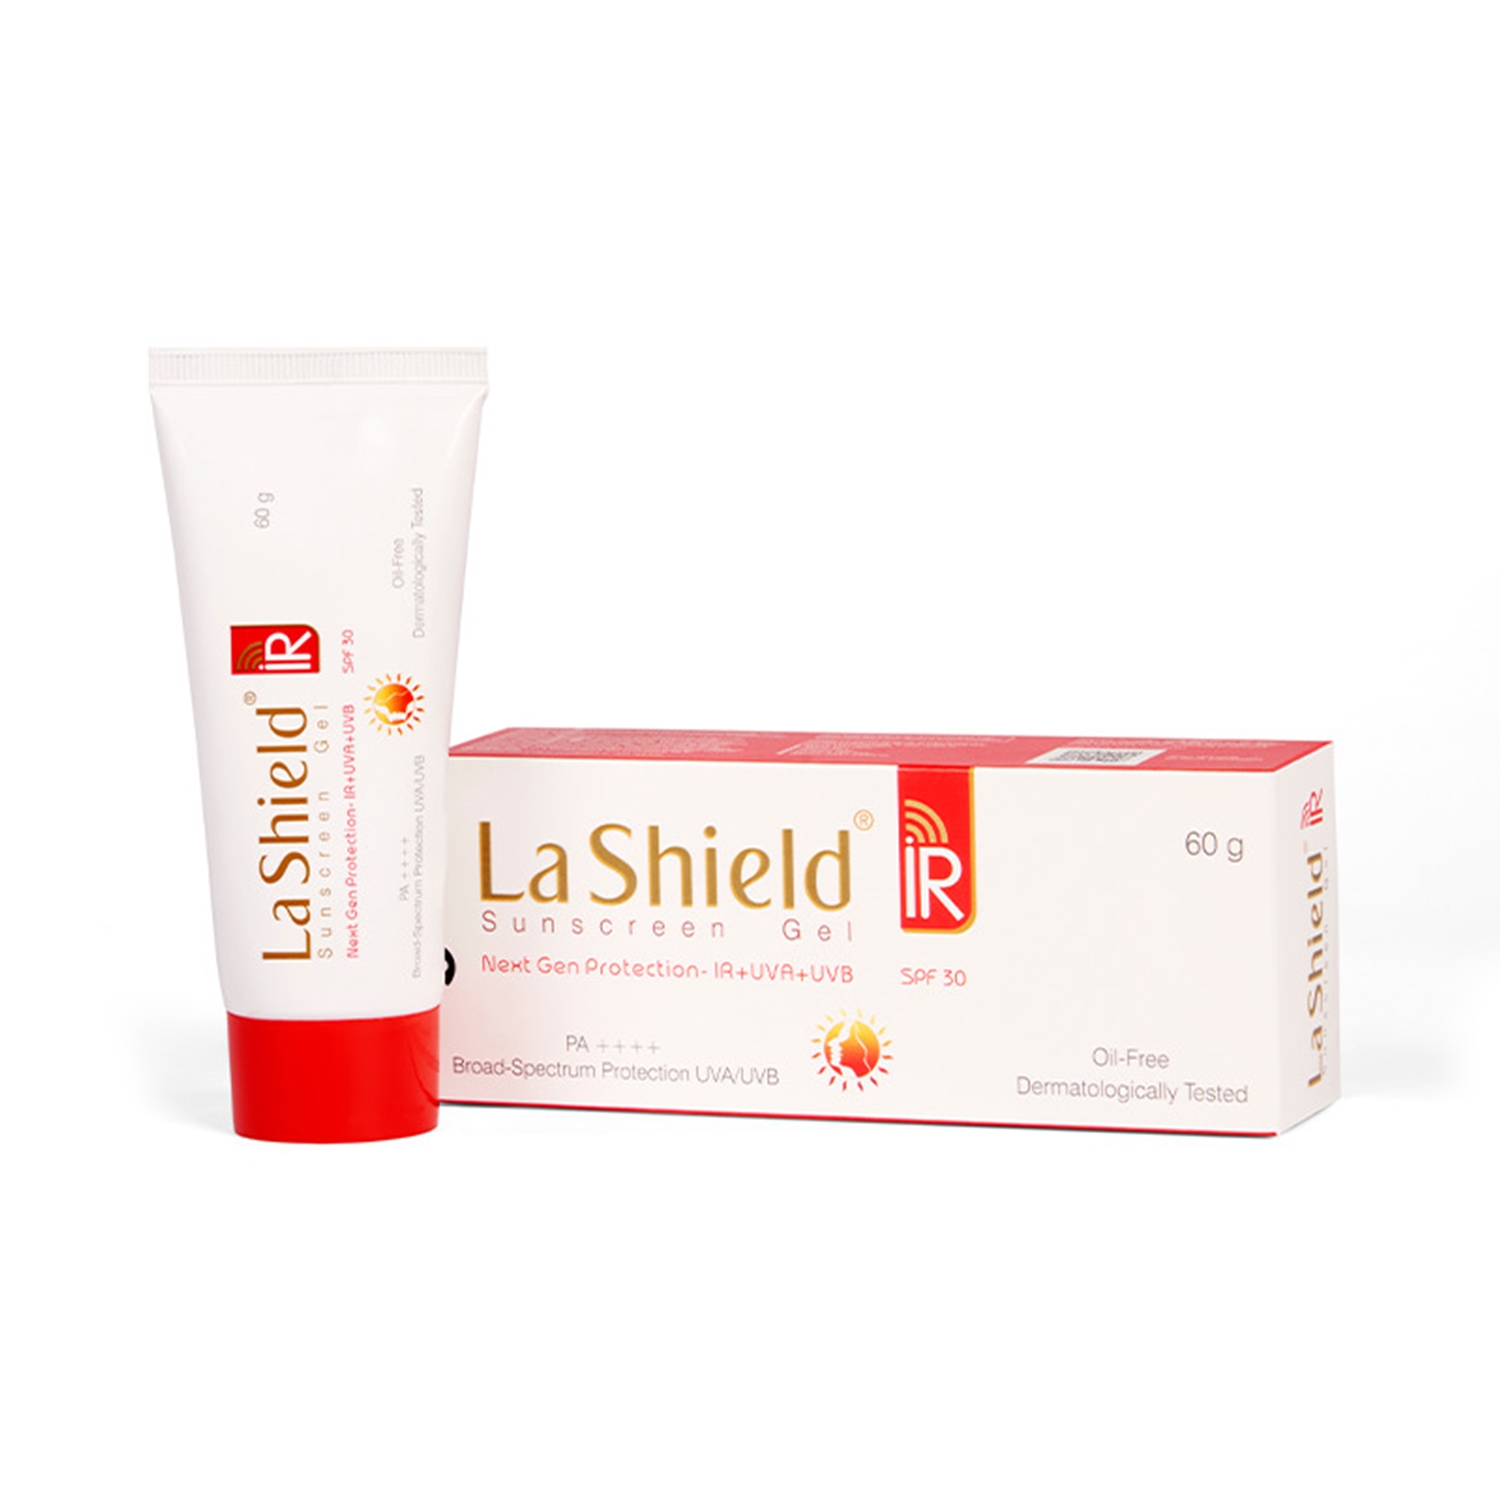 La Shield | La Shield IR SPF 30+ & PA+++ Sunscreen Gel (60g)